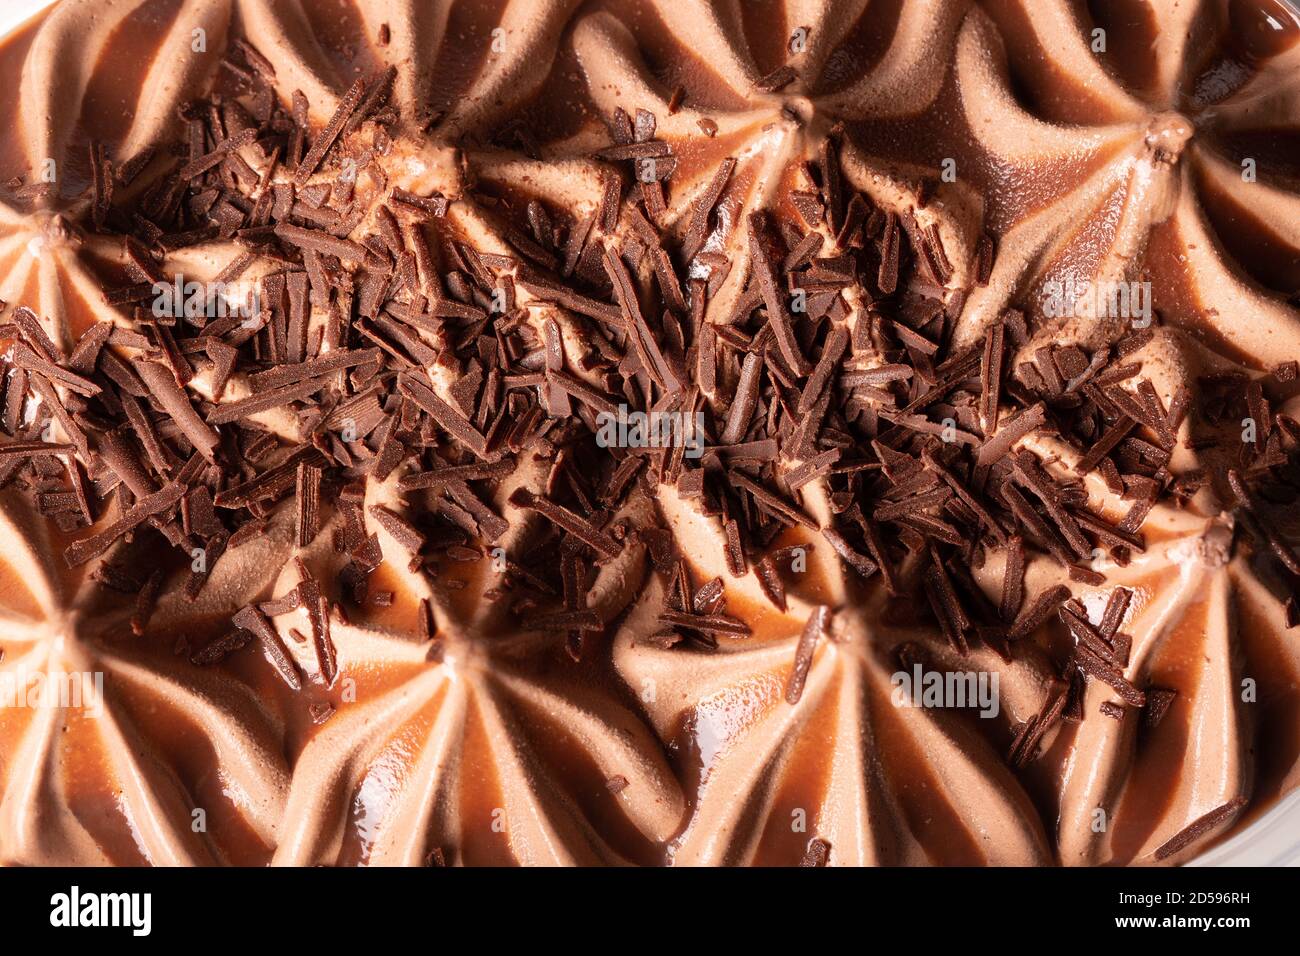 Peaks and ridges of triple chocolate ice cream. Stock Photo